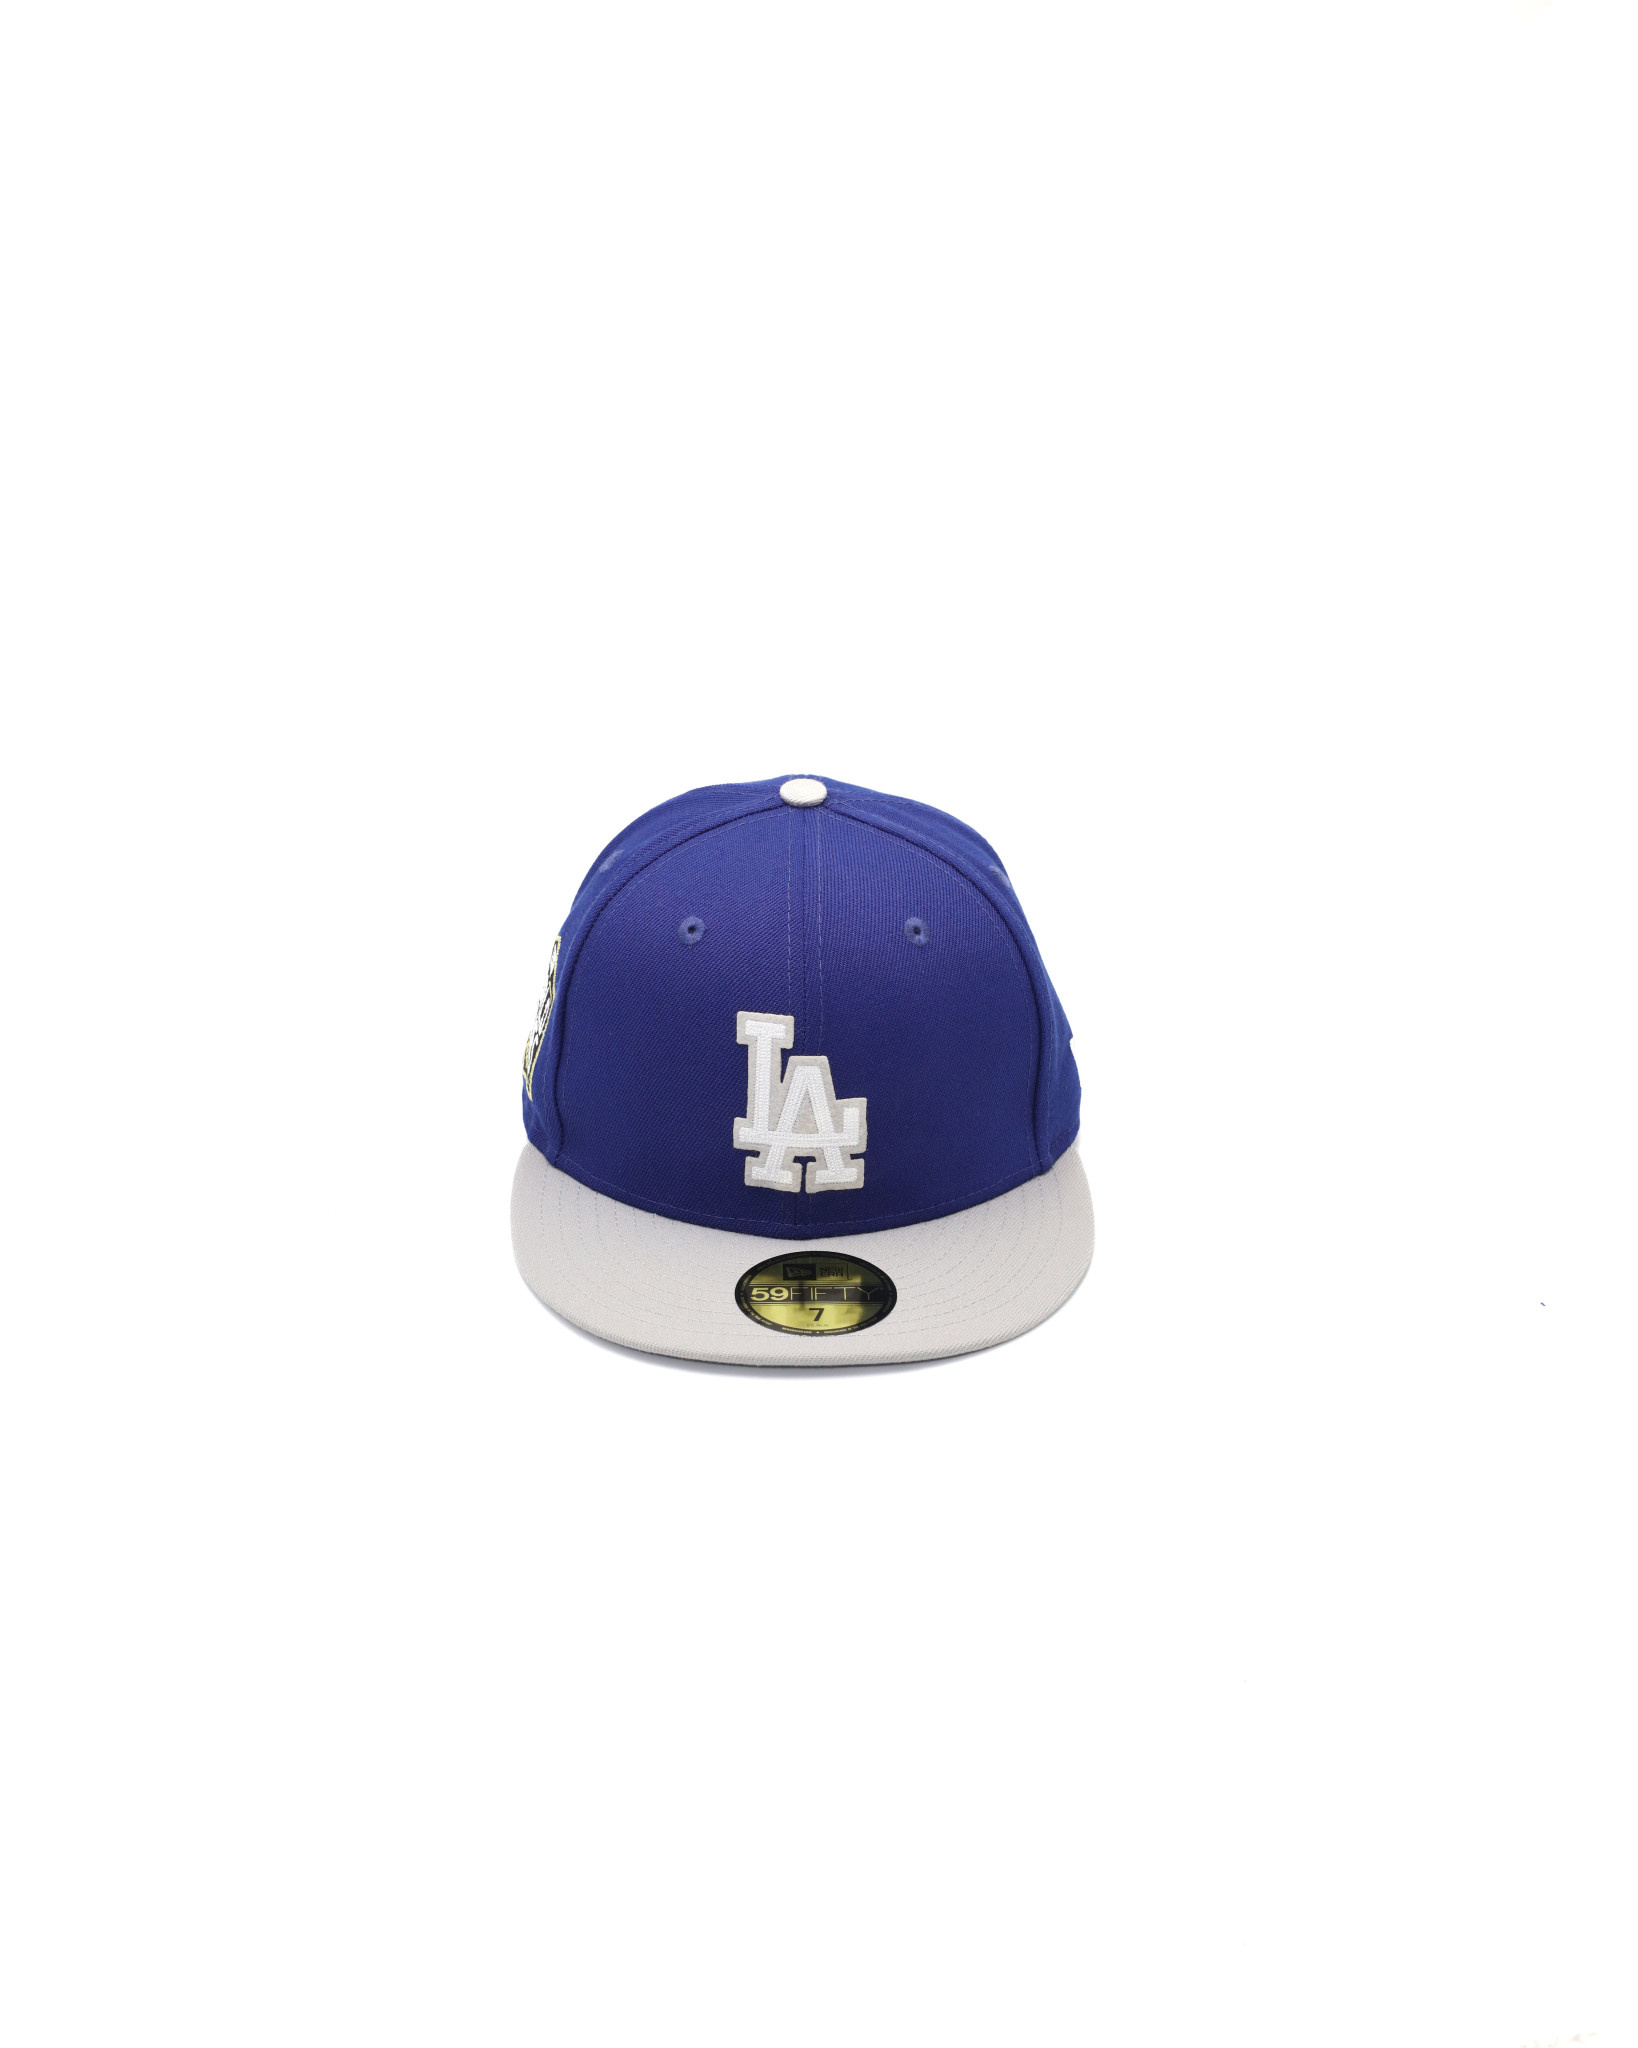 Los Angeles Dodgers Mexico Wordmark New Era Snapback Hat Cap - BLUE